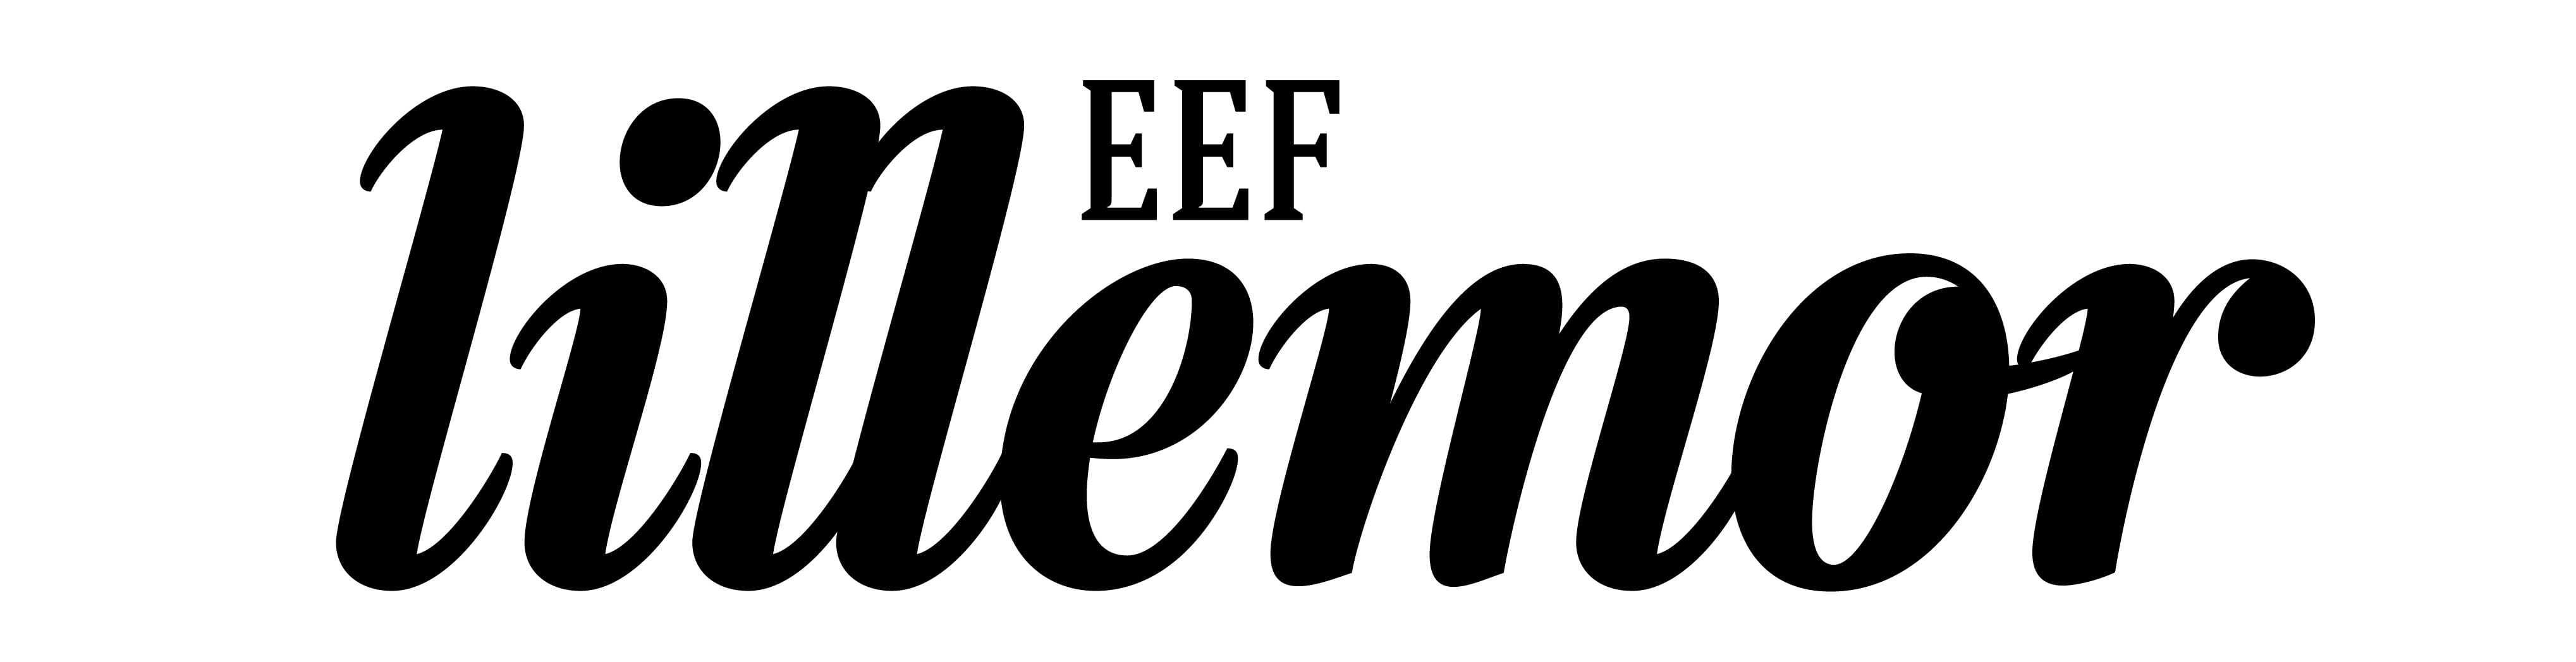 Eef-Lillemor-identity-logo-01-e1510748973637